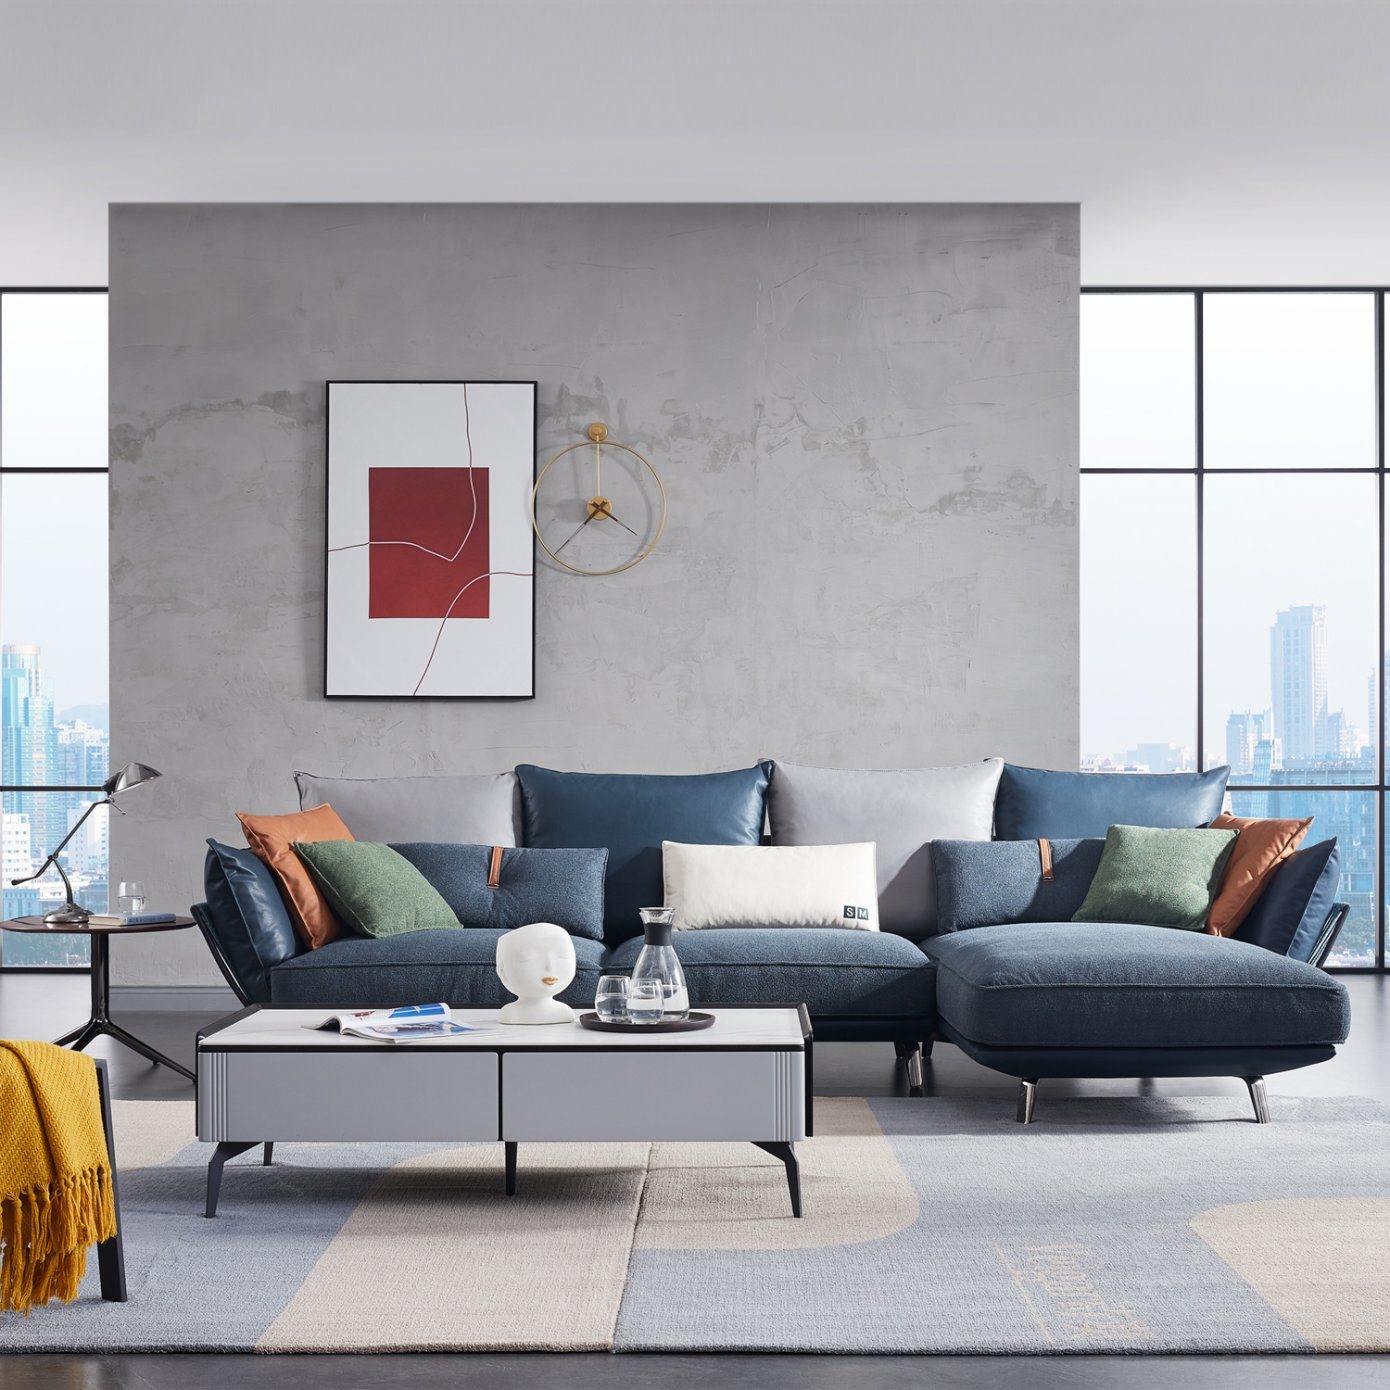 American Style Home Hotel Living Room Fabric Divan Sofa